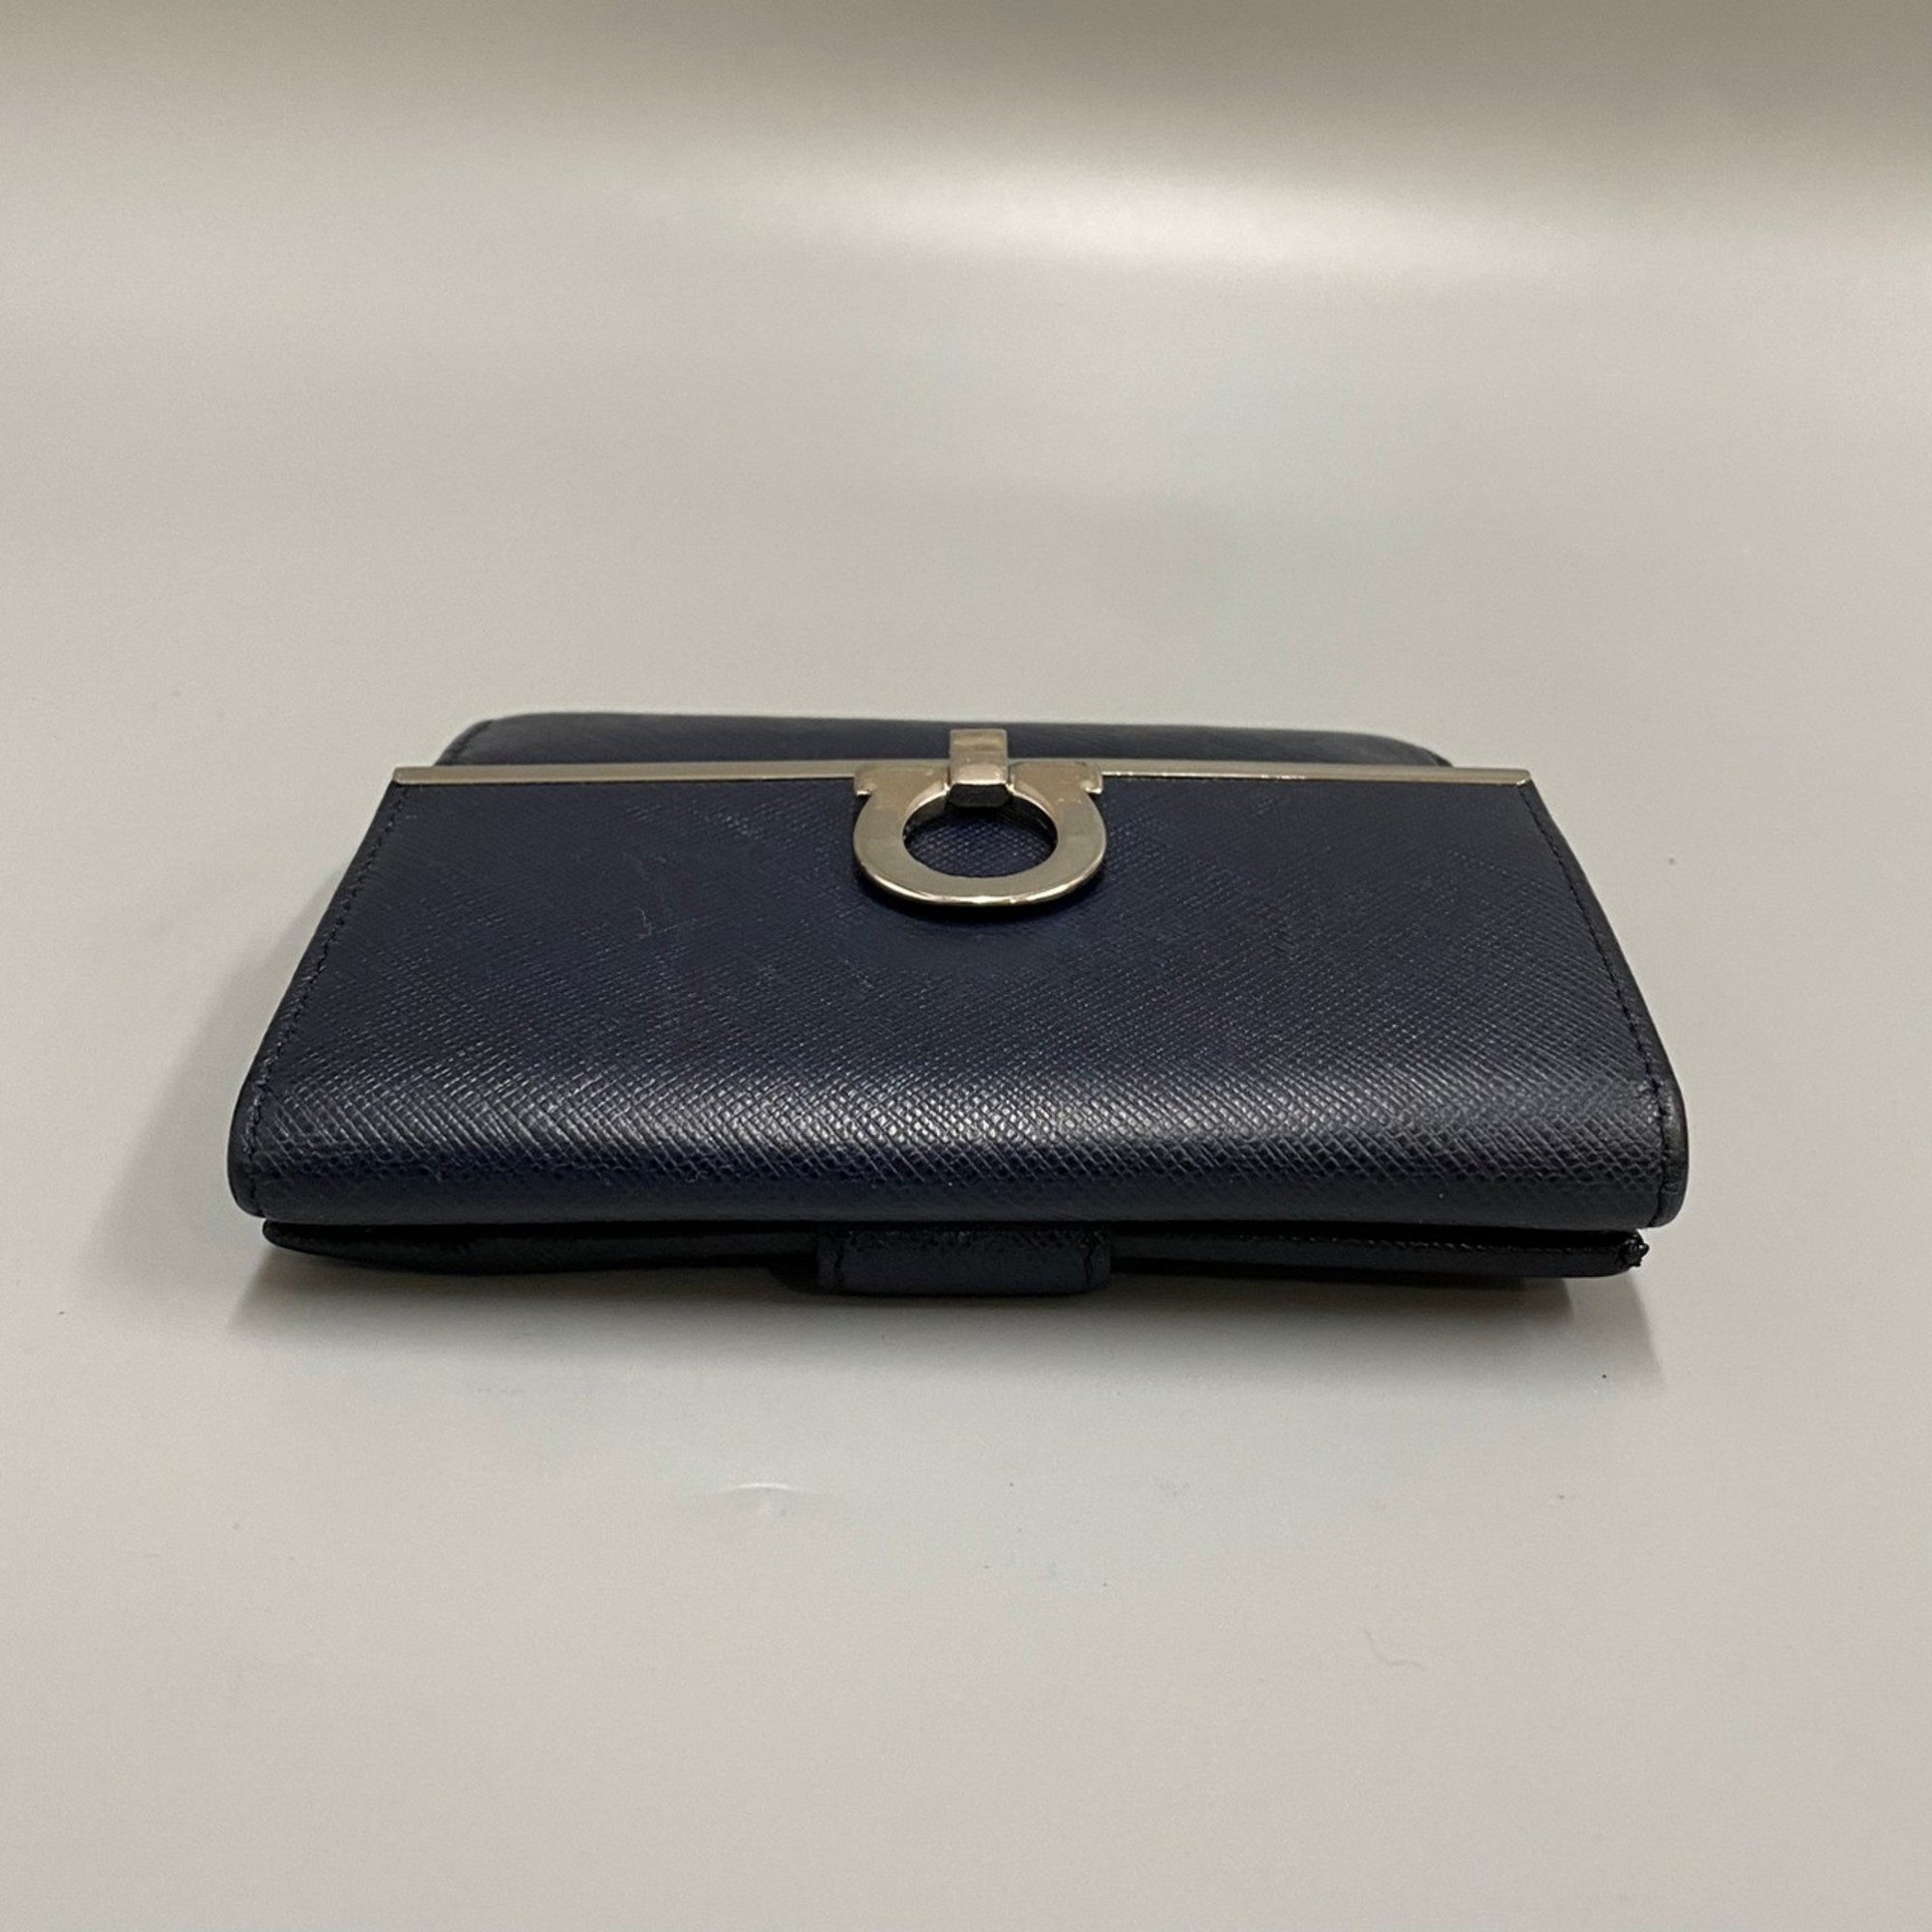 Salvatore Ferragamo Gancini Leather Genuine Trifold Wallet Mini Navy